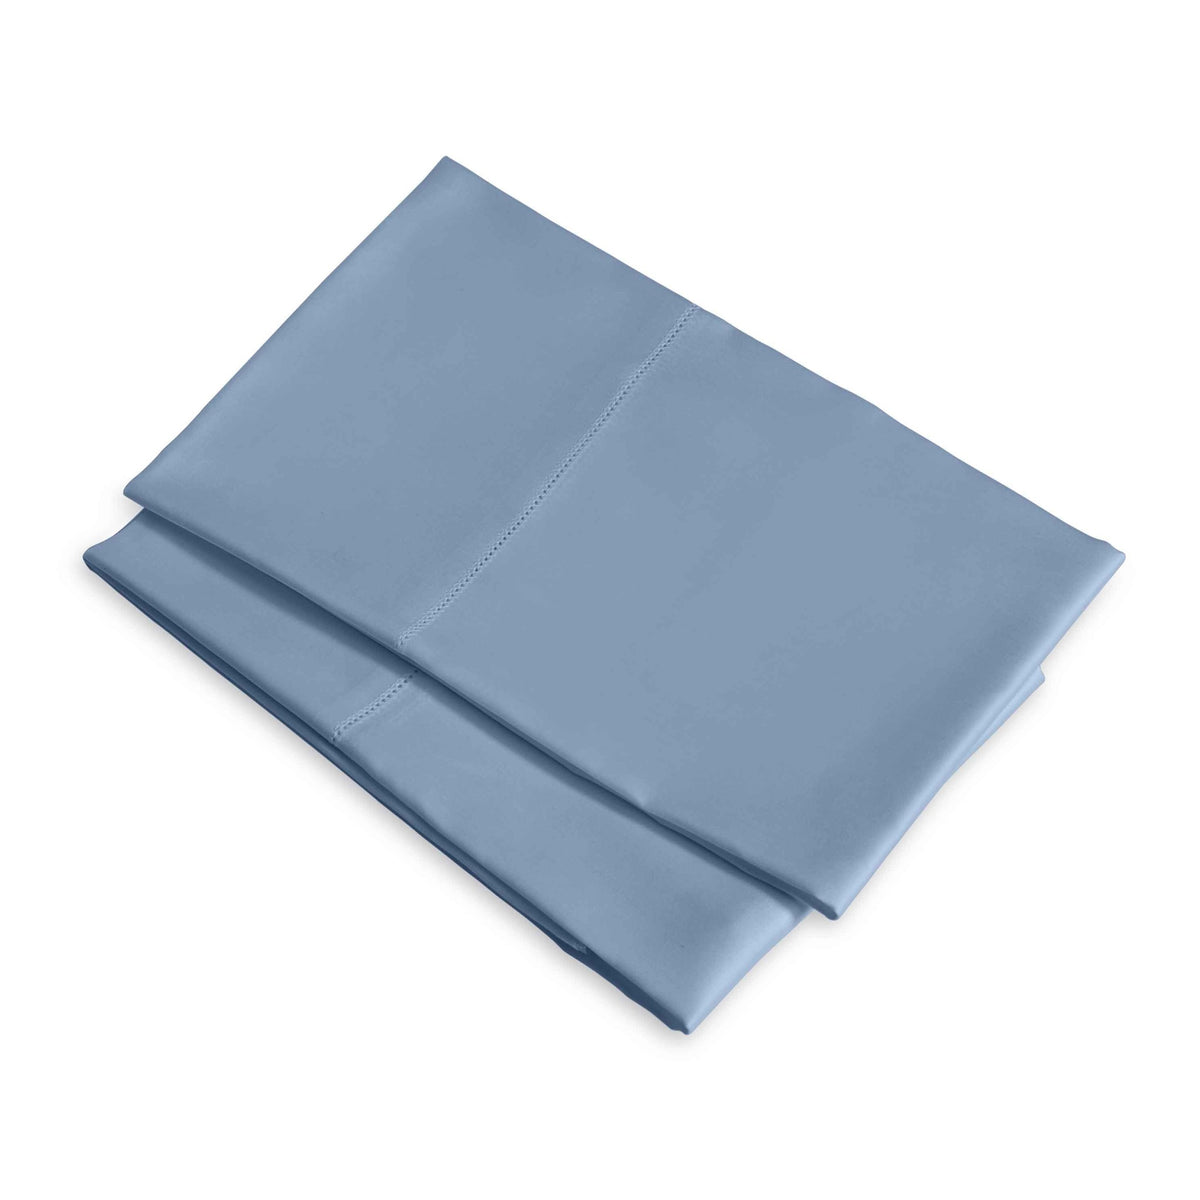 Clear Image of Signoria Raffaello Pillowcases in Air Force Blue Color